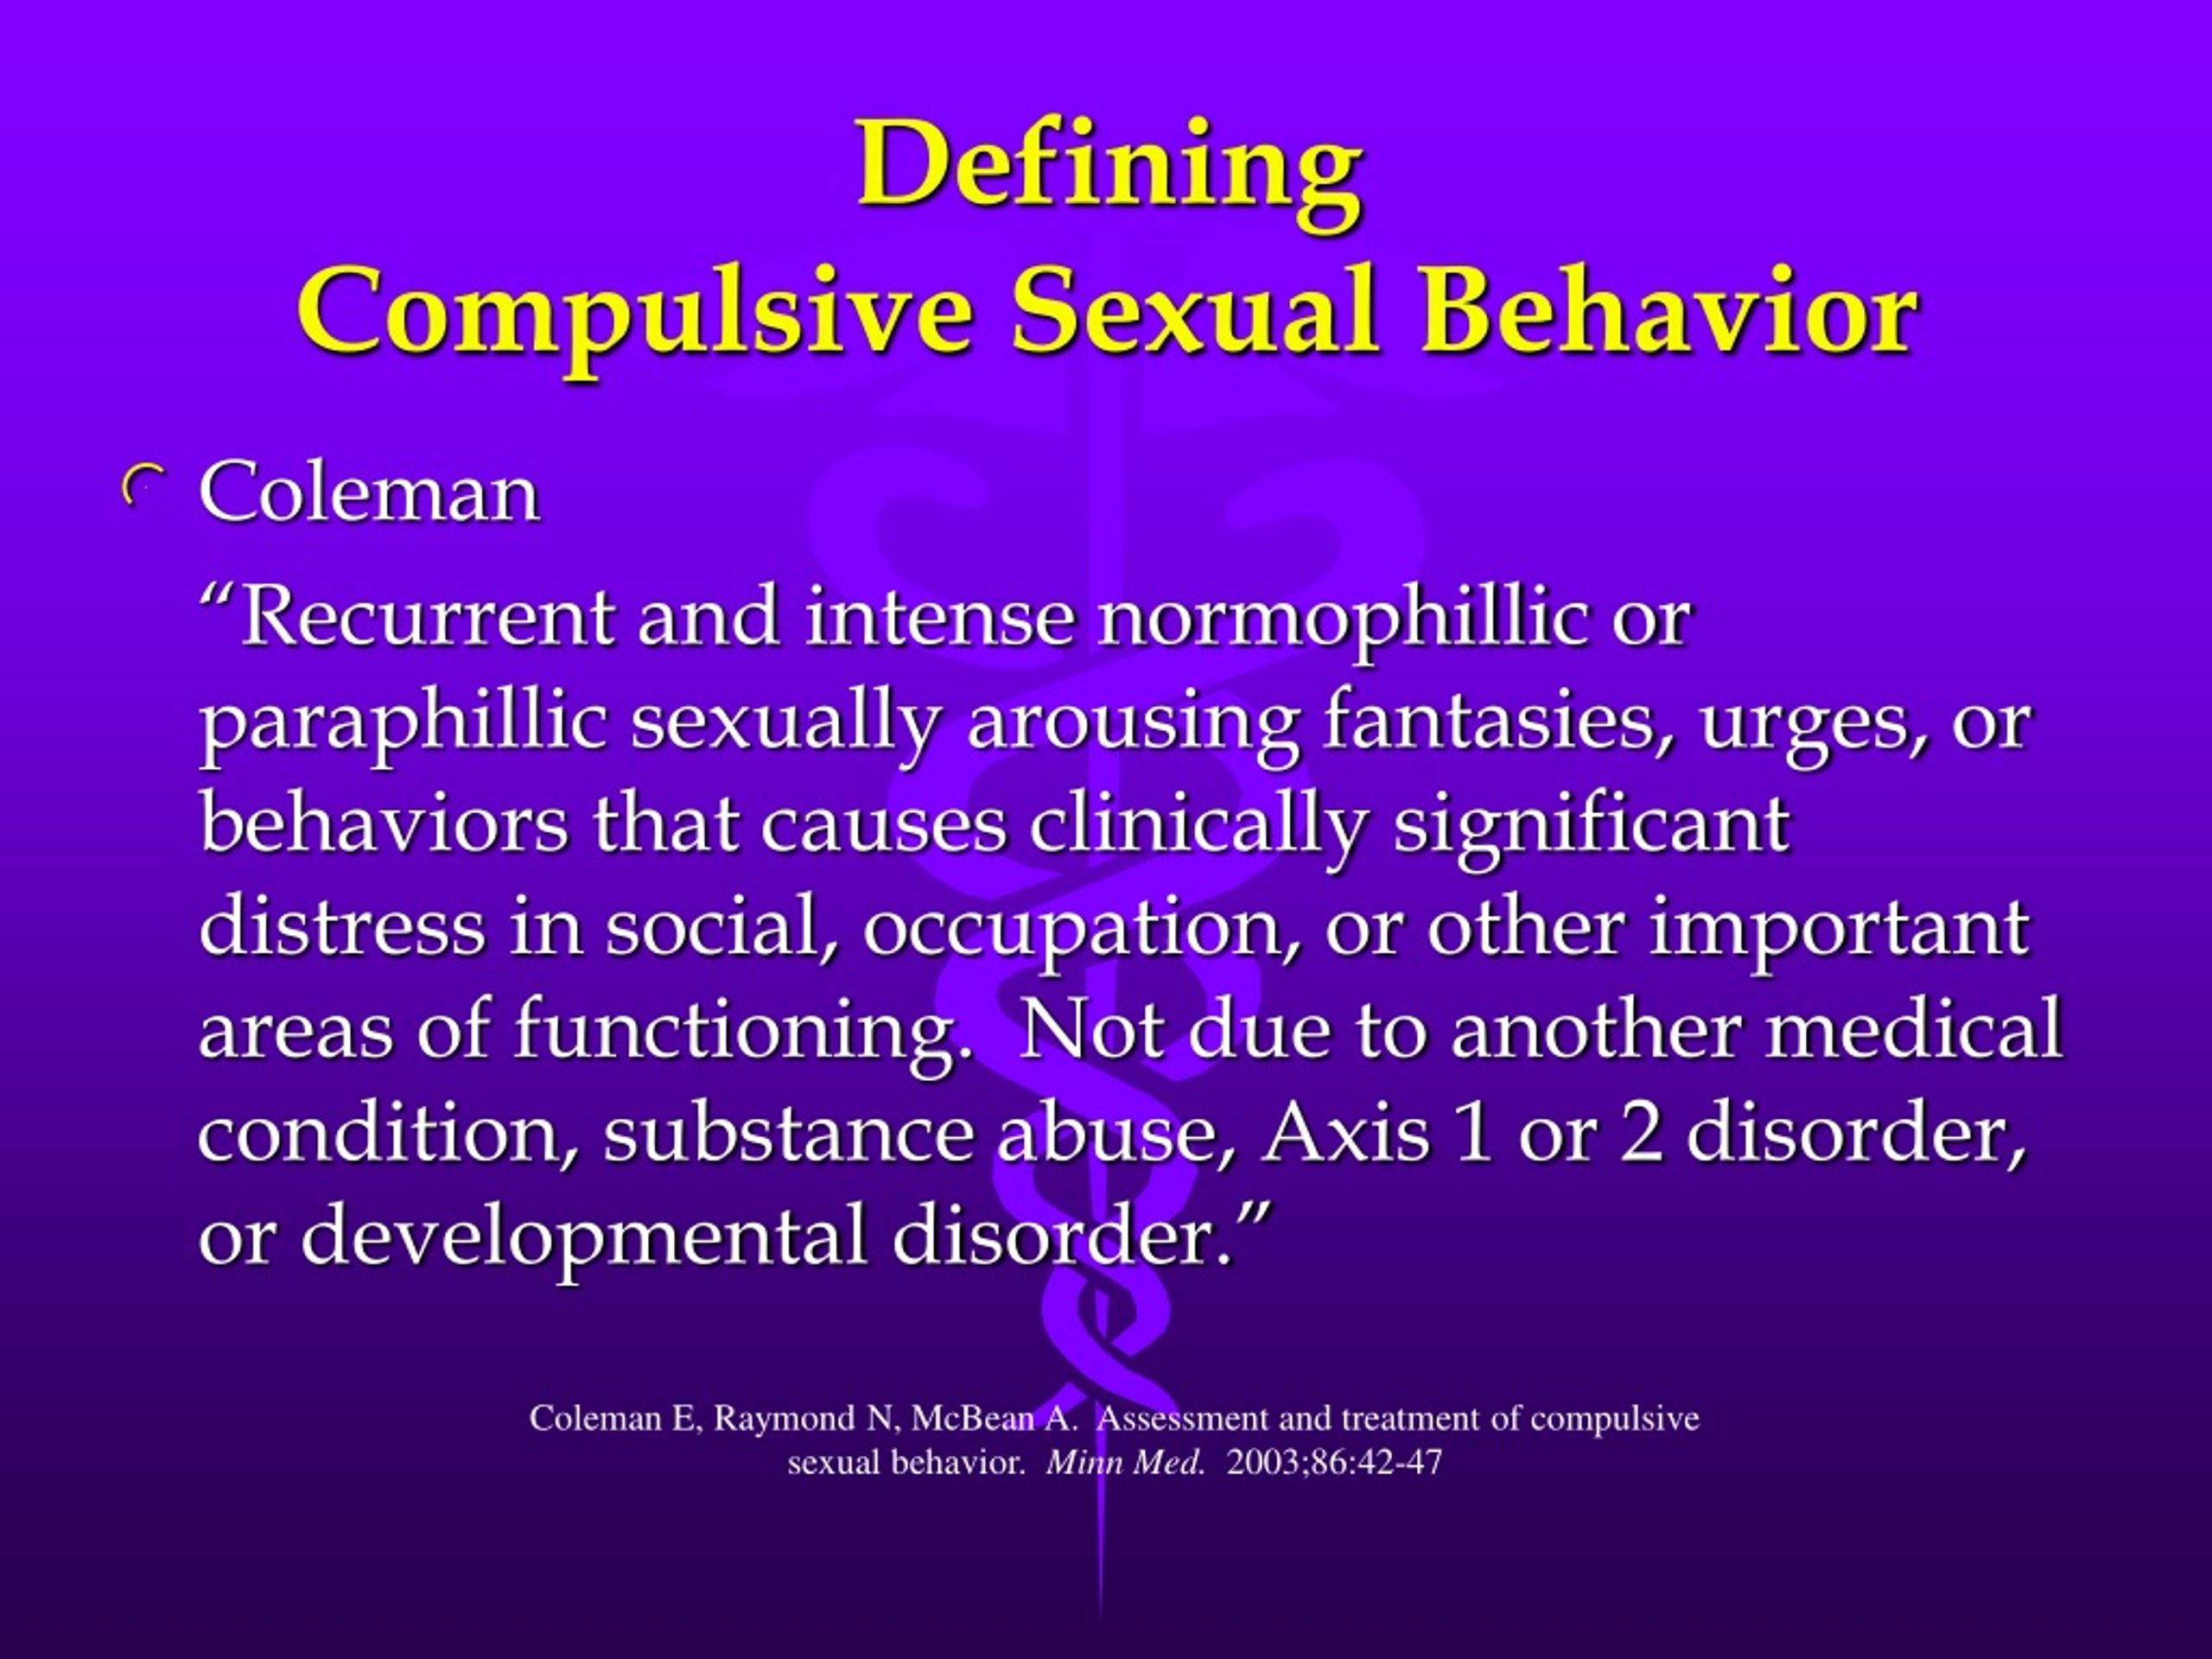 Ppt Compulsive Sexual Behavior Powerpoint Presentation Free Download Id9141225 3487